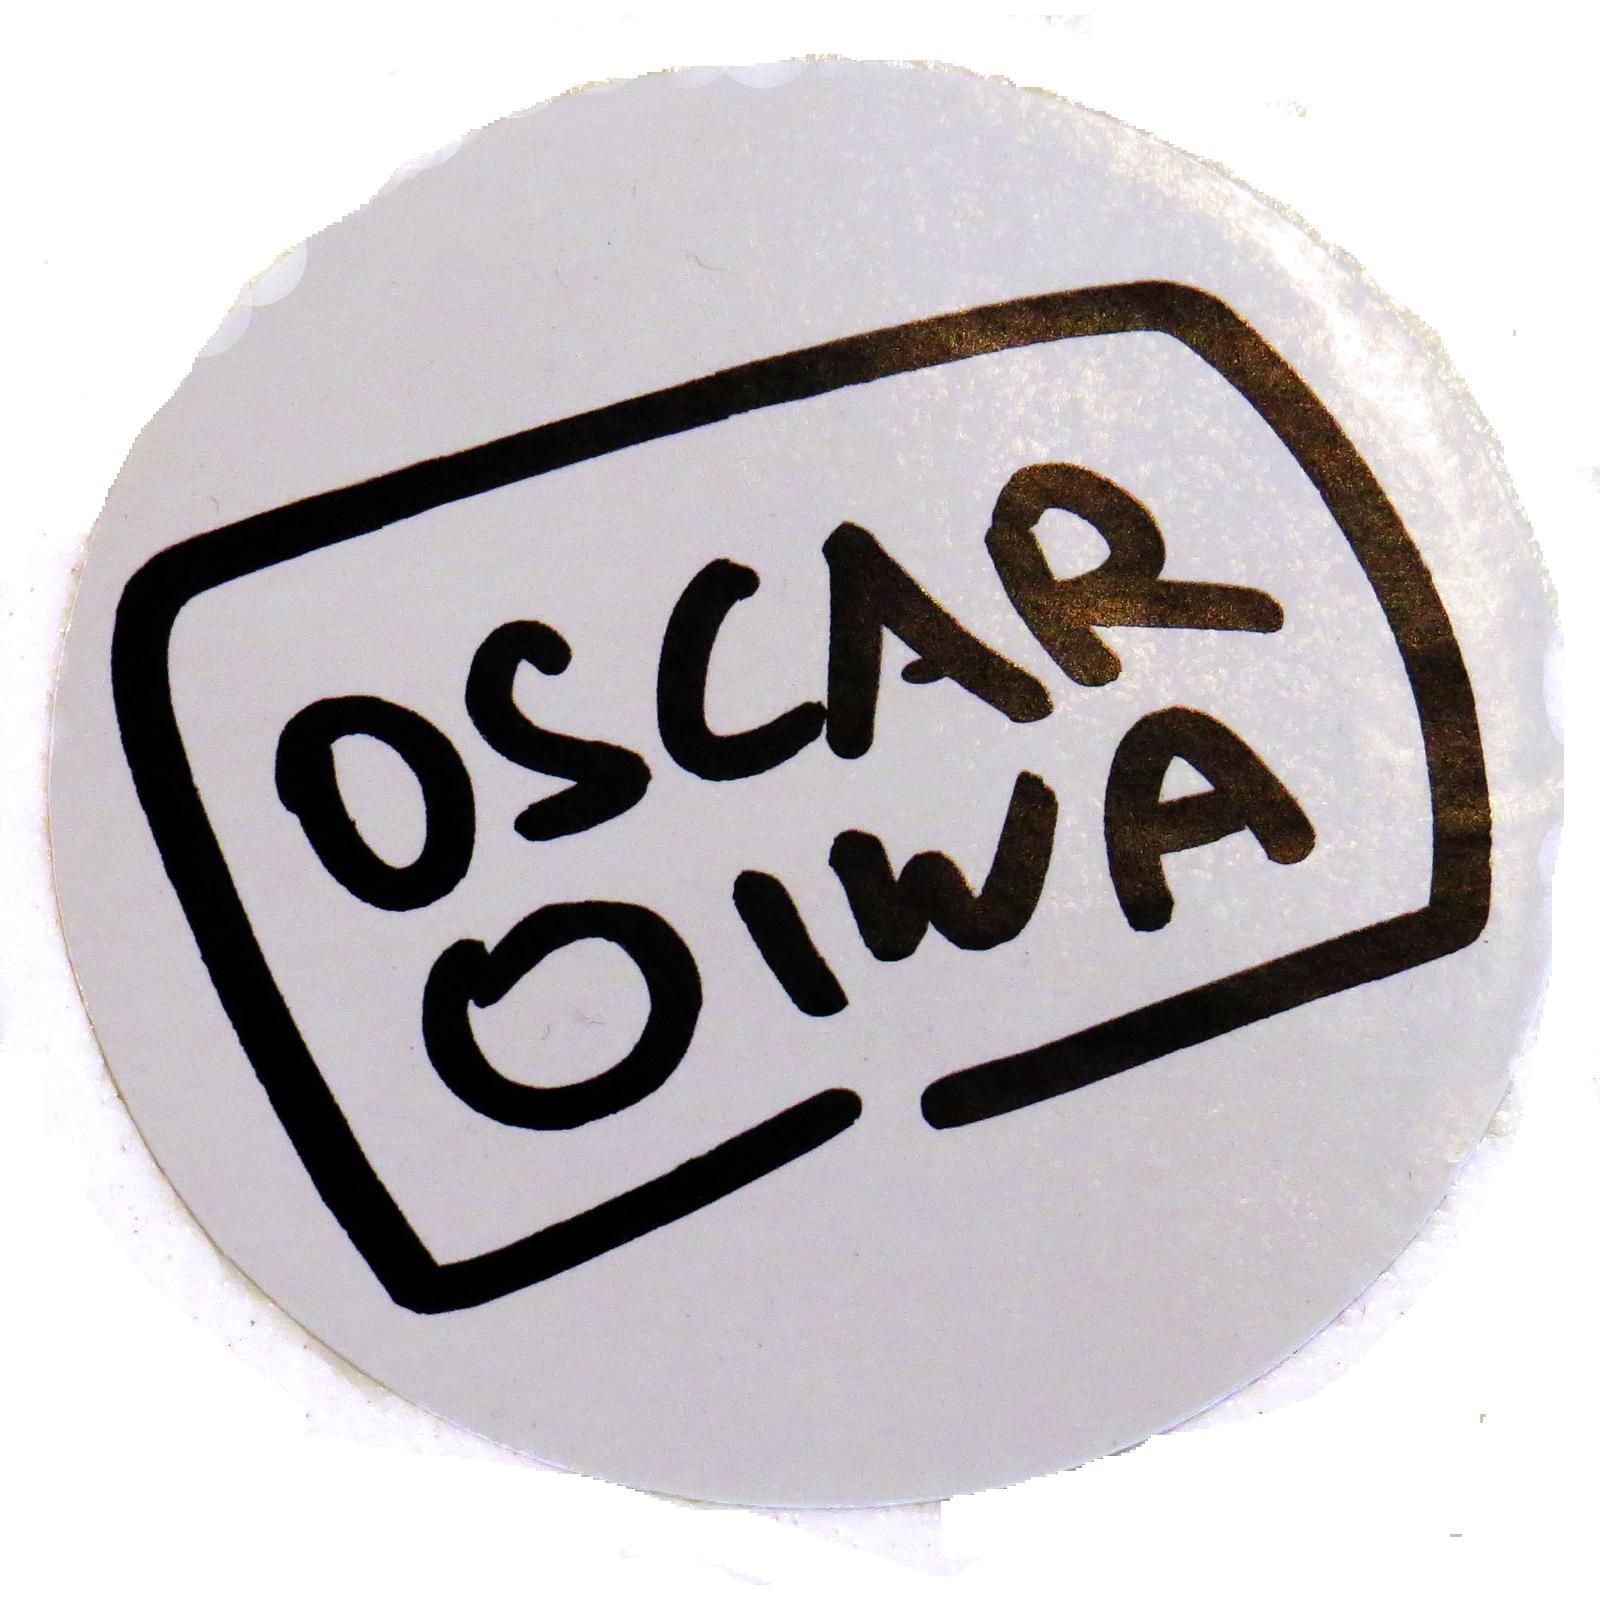 PAM Oscar Oiwa Signature Sticker image01